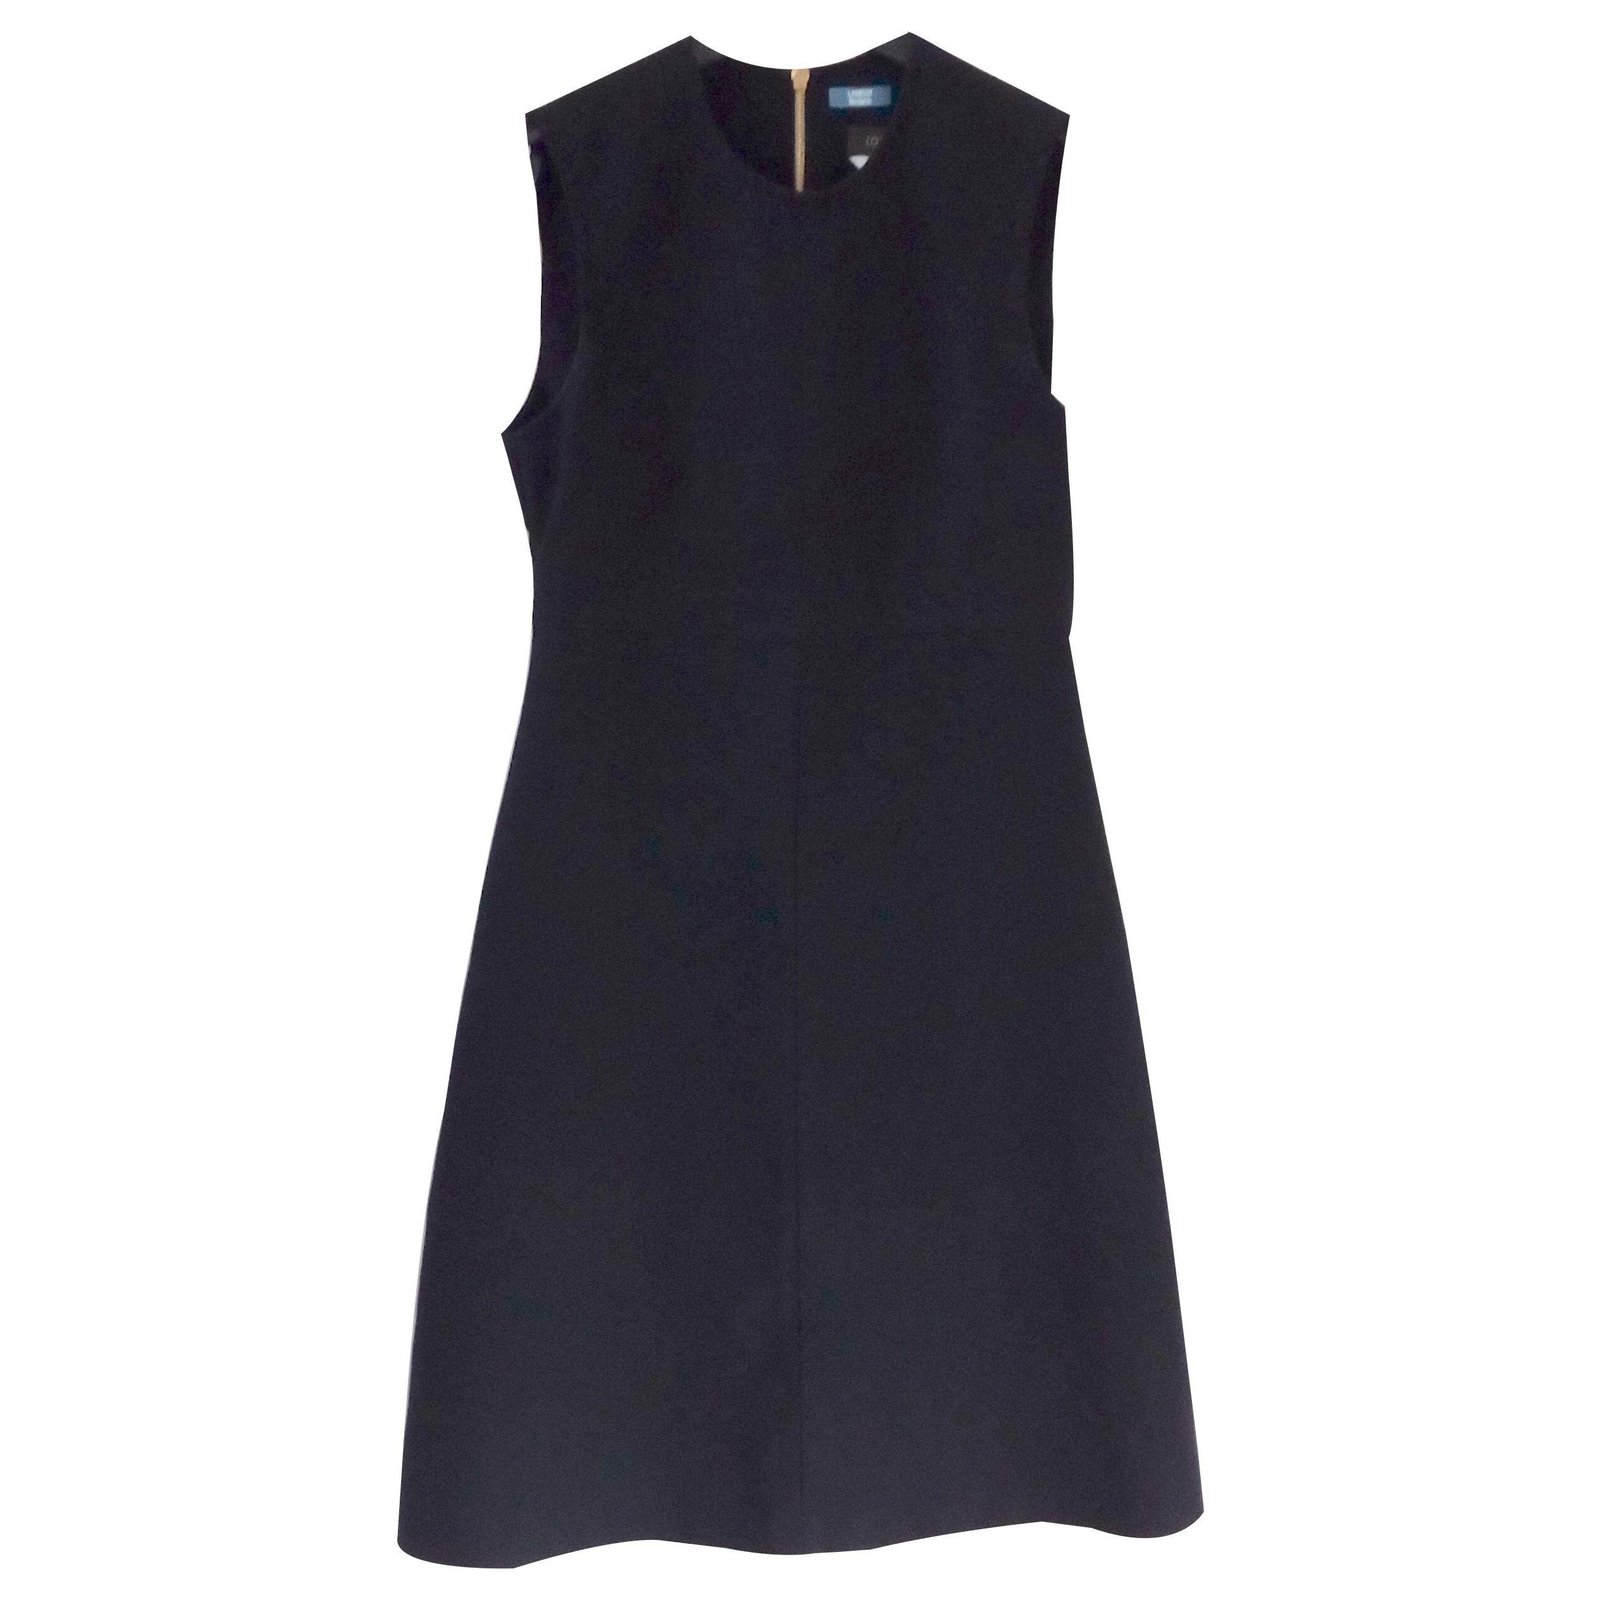 Stylish LOUIS VUITTON UNIFORMES BLACK WOMEN'S DRESS Size 32 Zip Back NEW